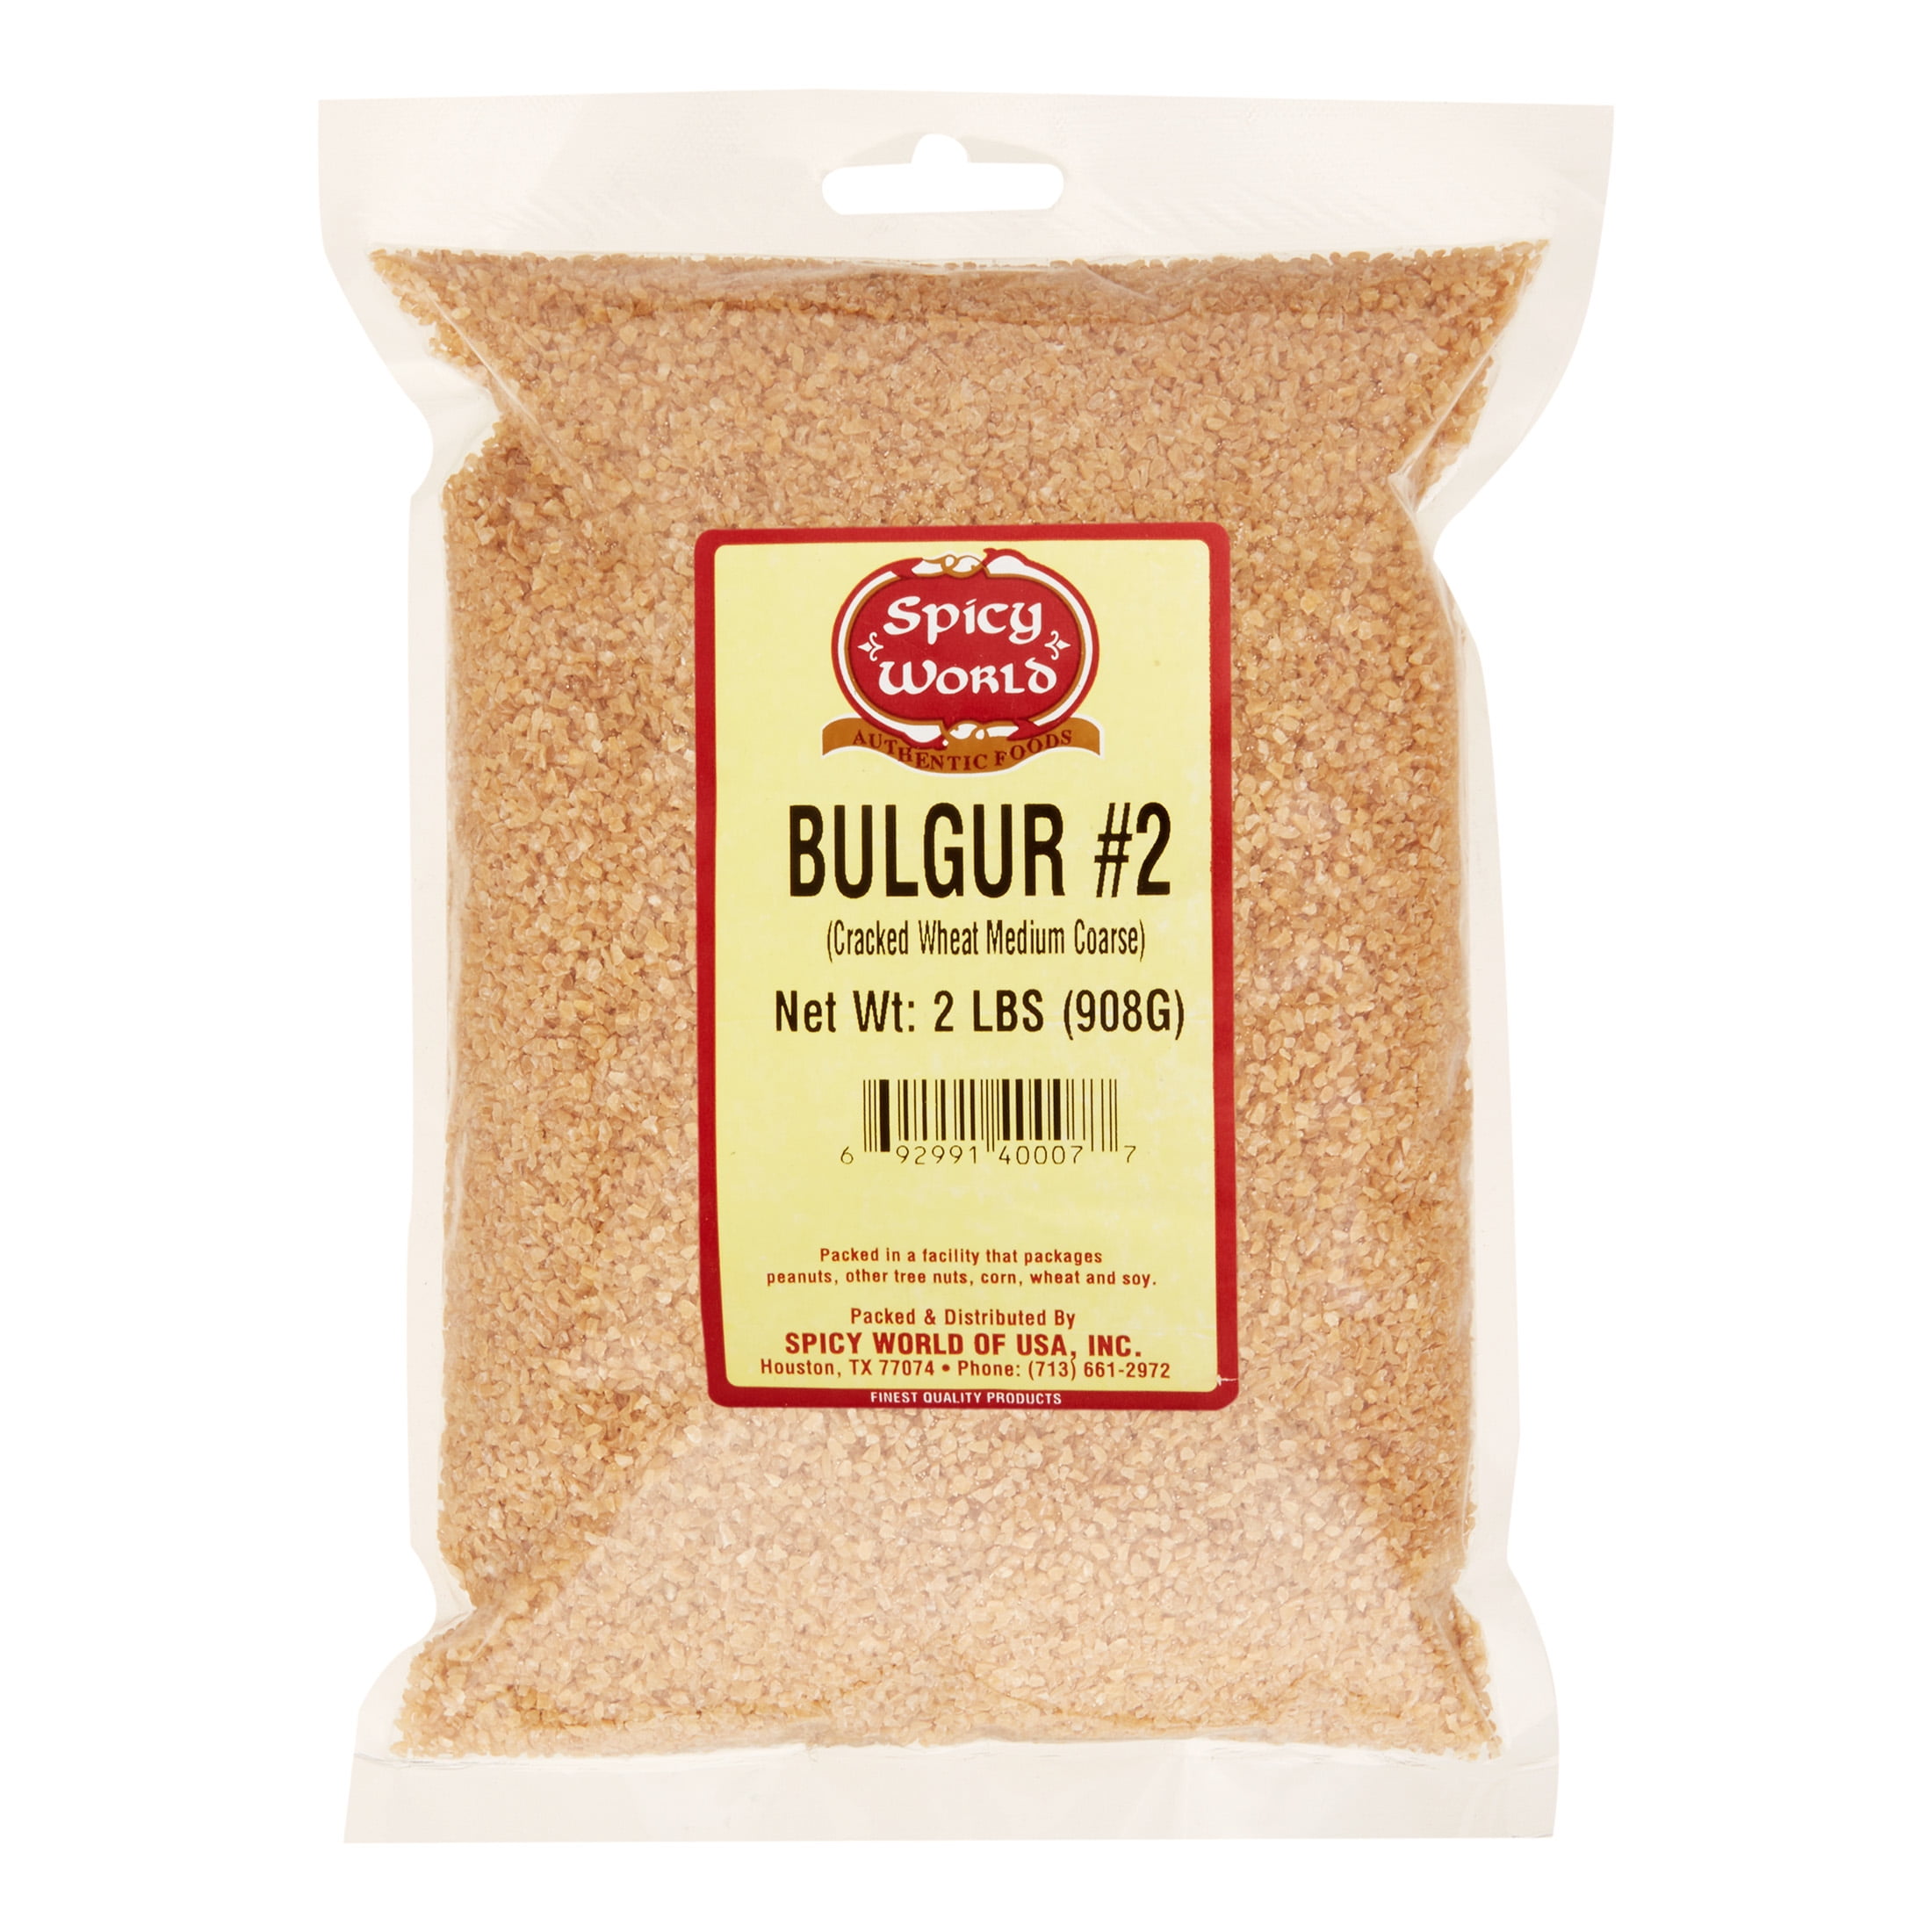 Spicy World Bulgur Cracked Wheat Medium #2, 2 Lb - Walmart.com